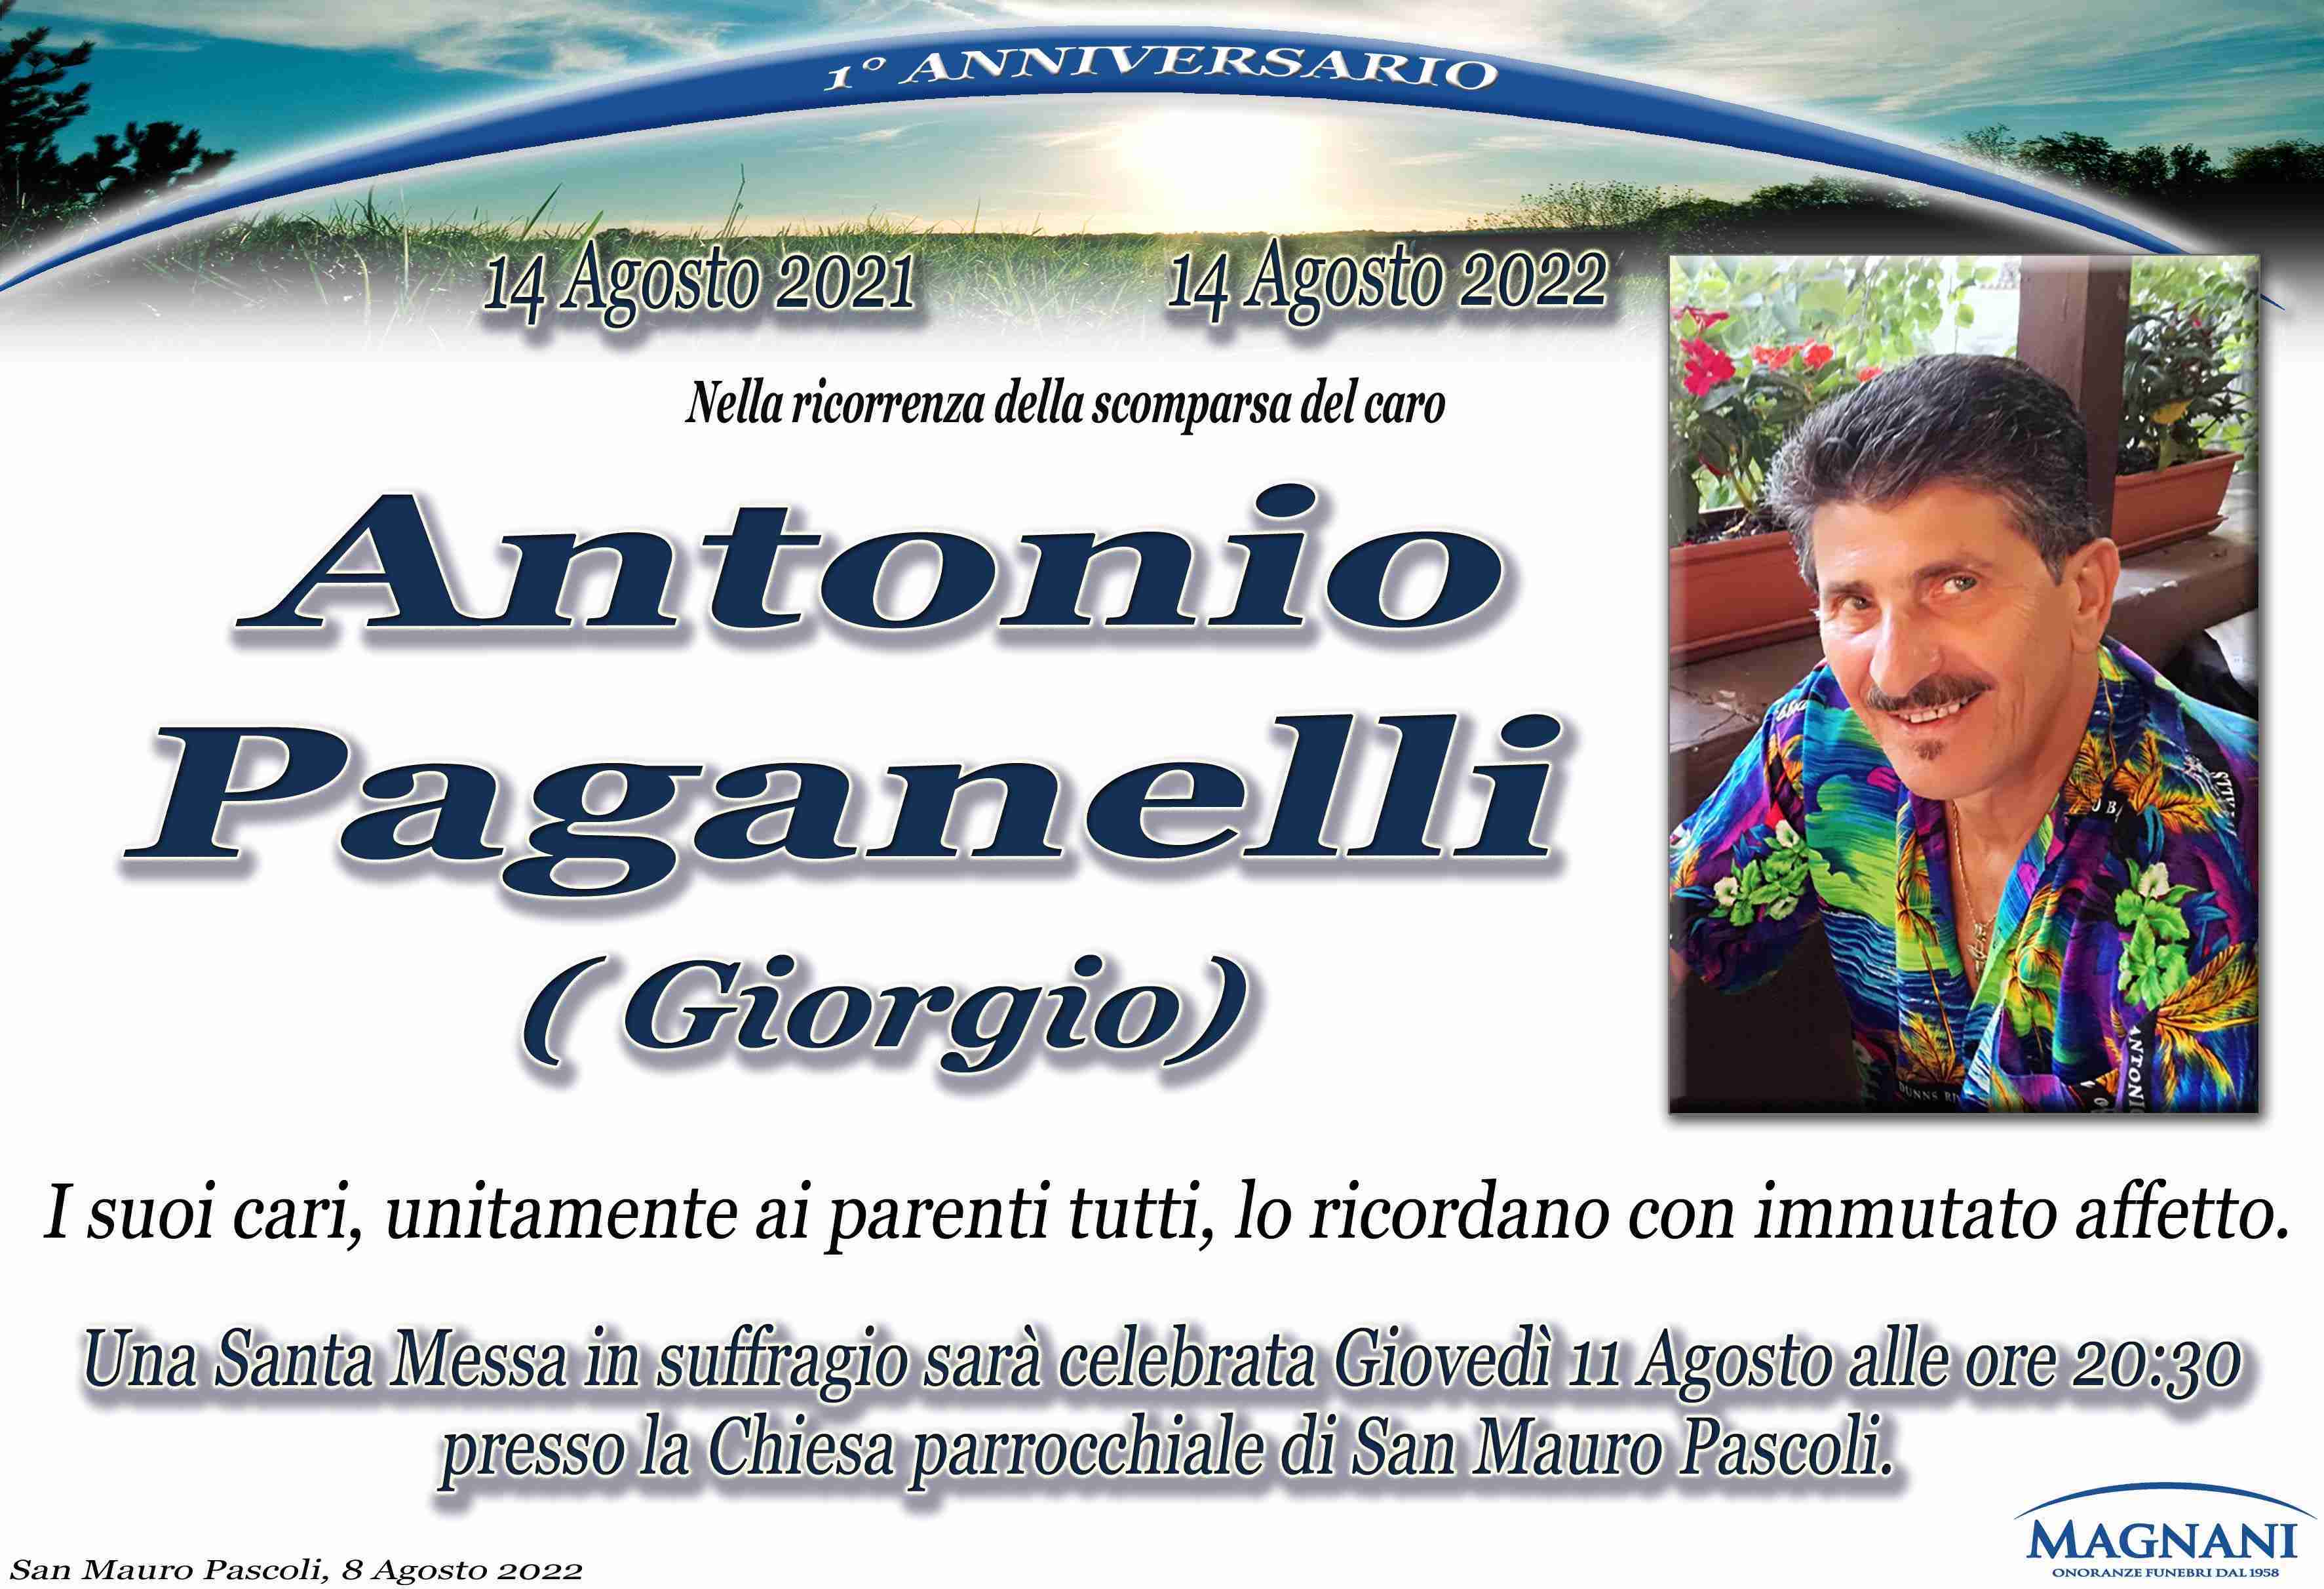 Antonio Paganelli